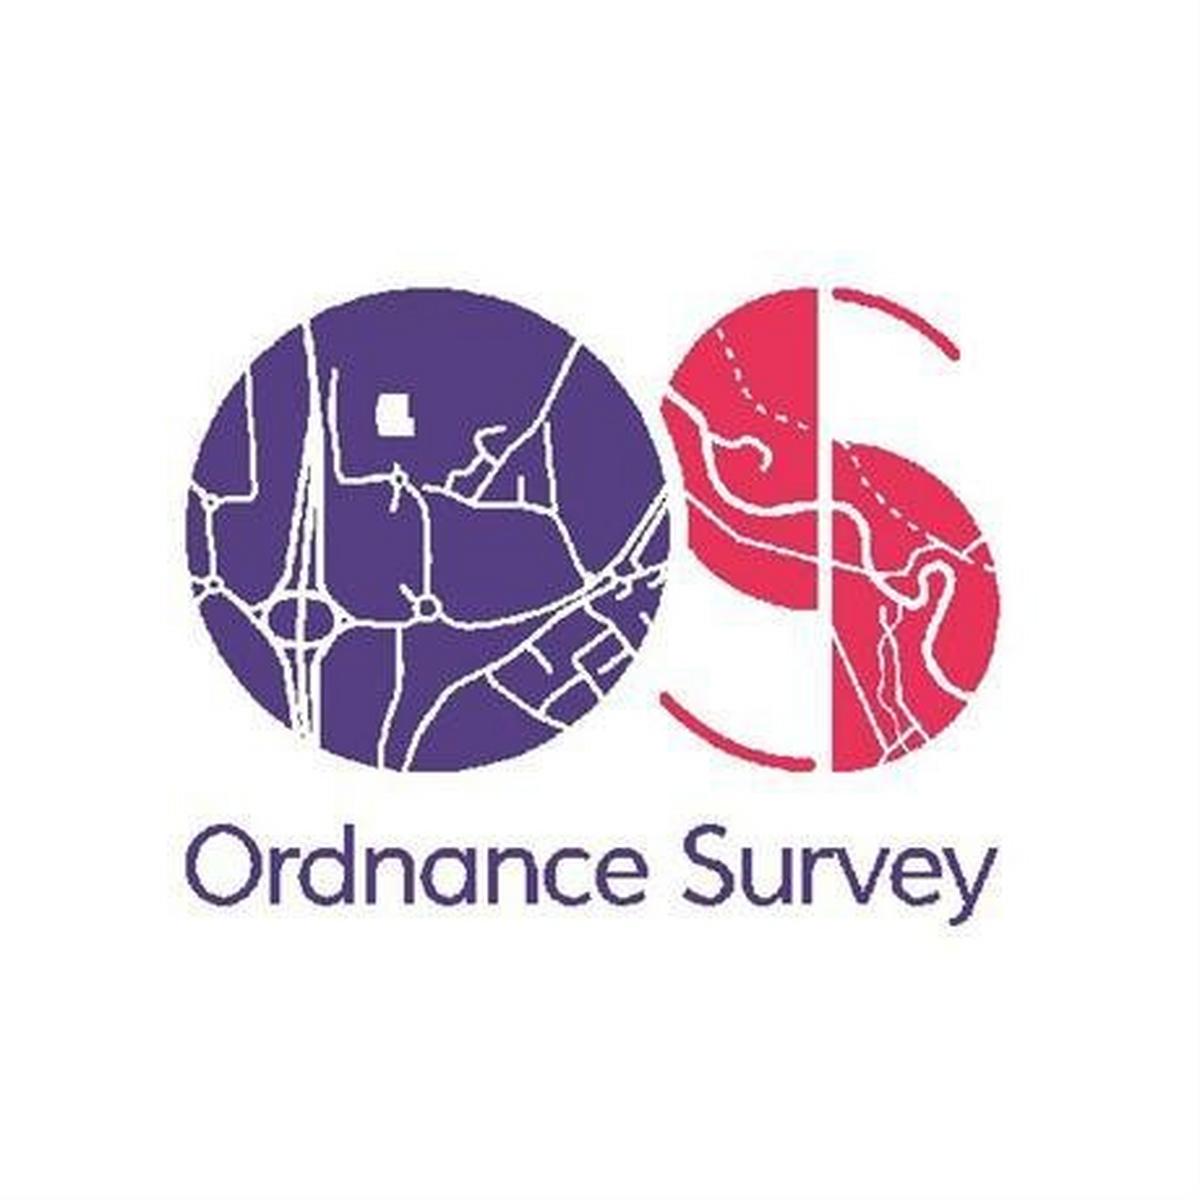 Ordnance Survey OS Landranger Map 88  Newcastle upon Tyne, Durham & Sunderland